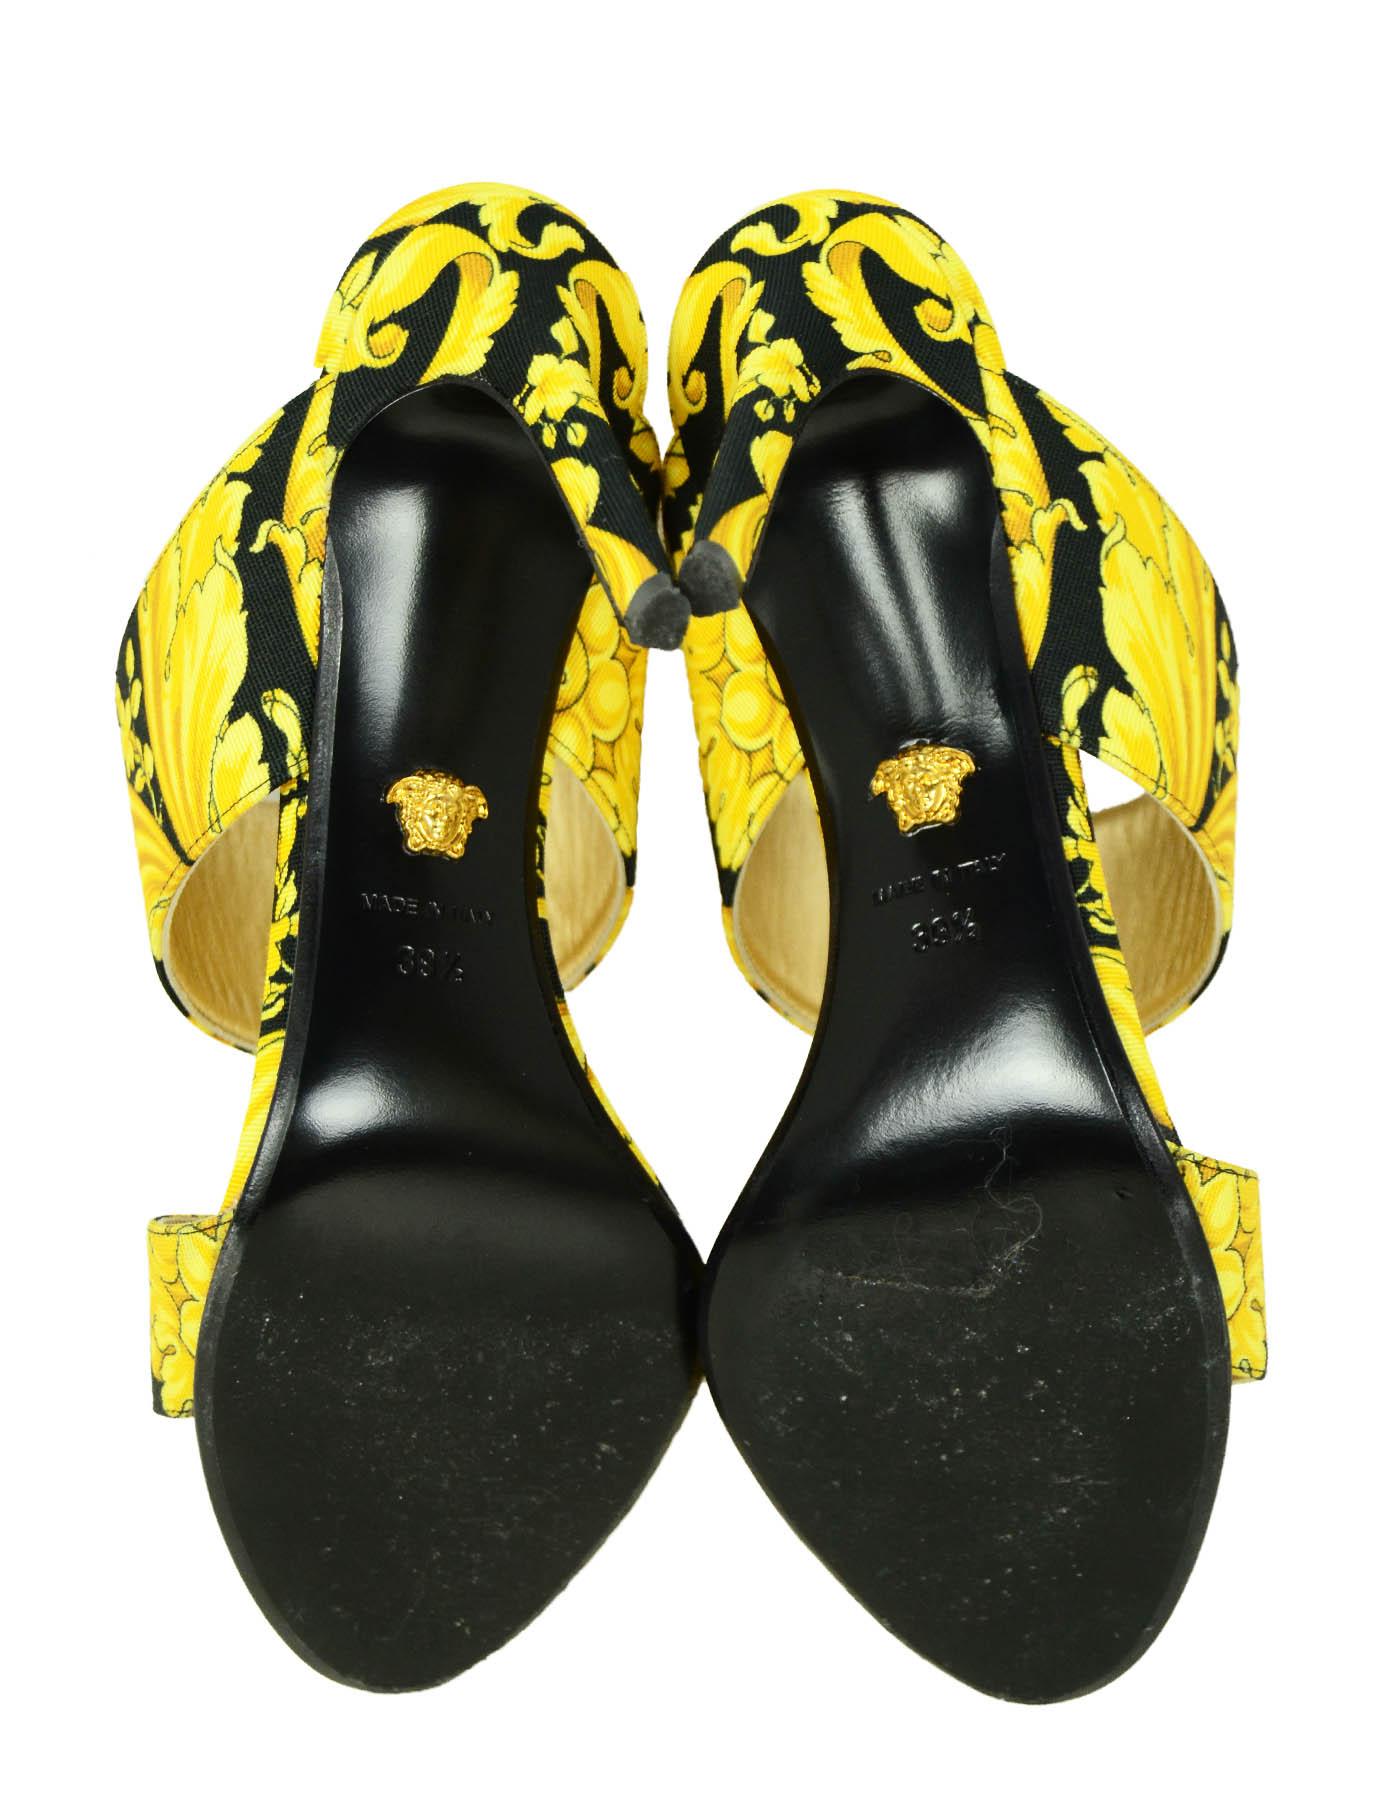 Women's Versace Black/Gold Grosgrain Barocco Print Heeled Sandals sz 39.5  rt. $825